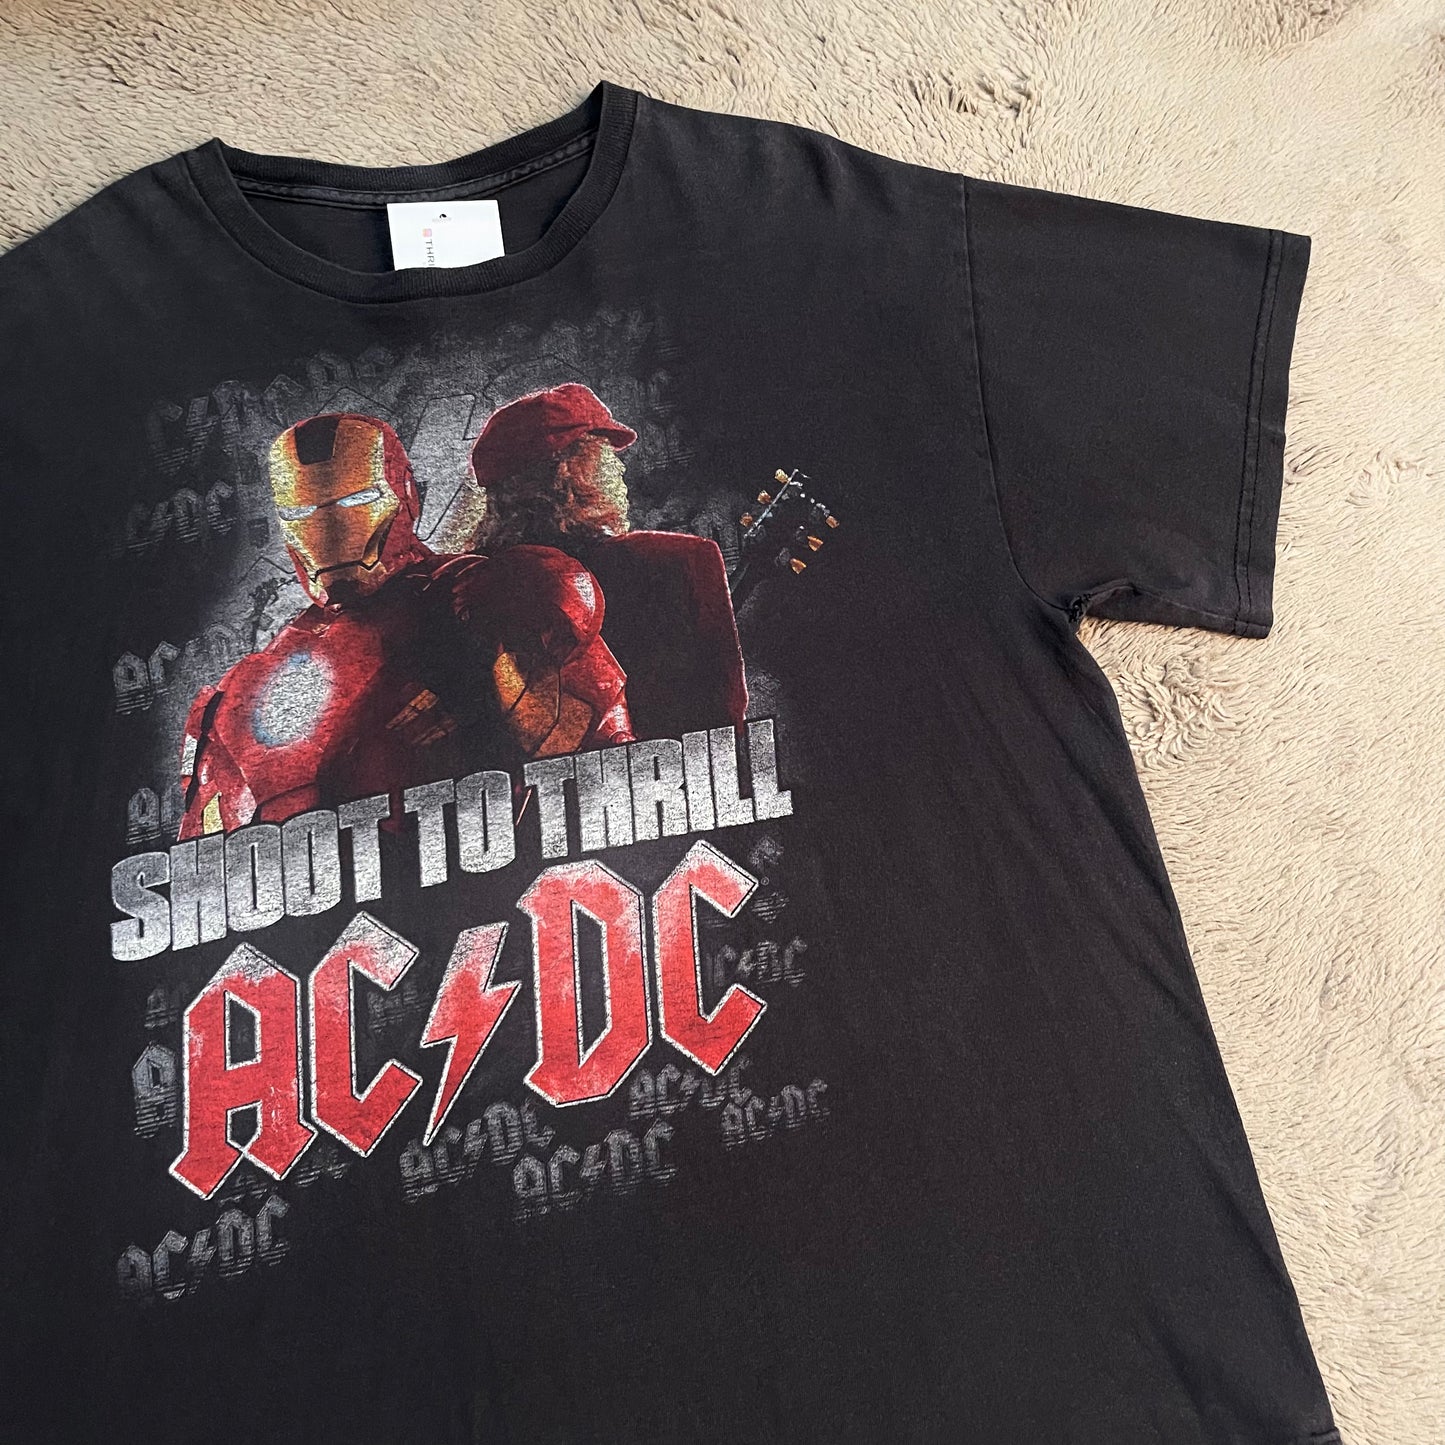 AC/DC x Iron Man 2 "Shoot To Thrill" Tee (L)